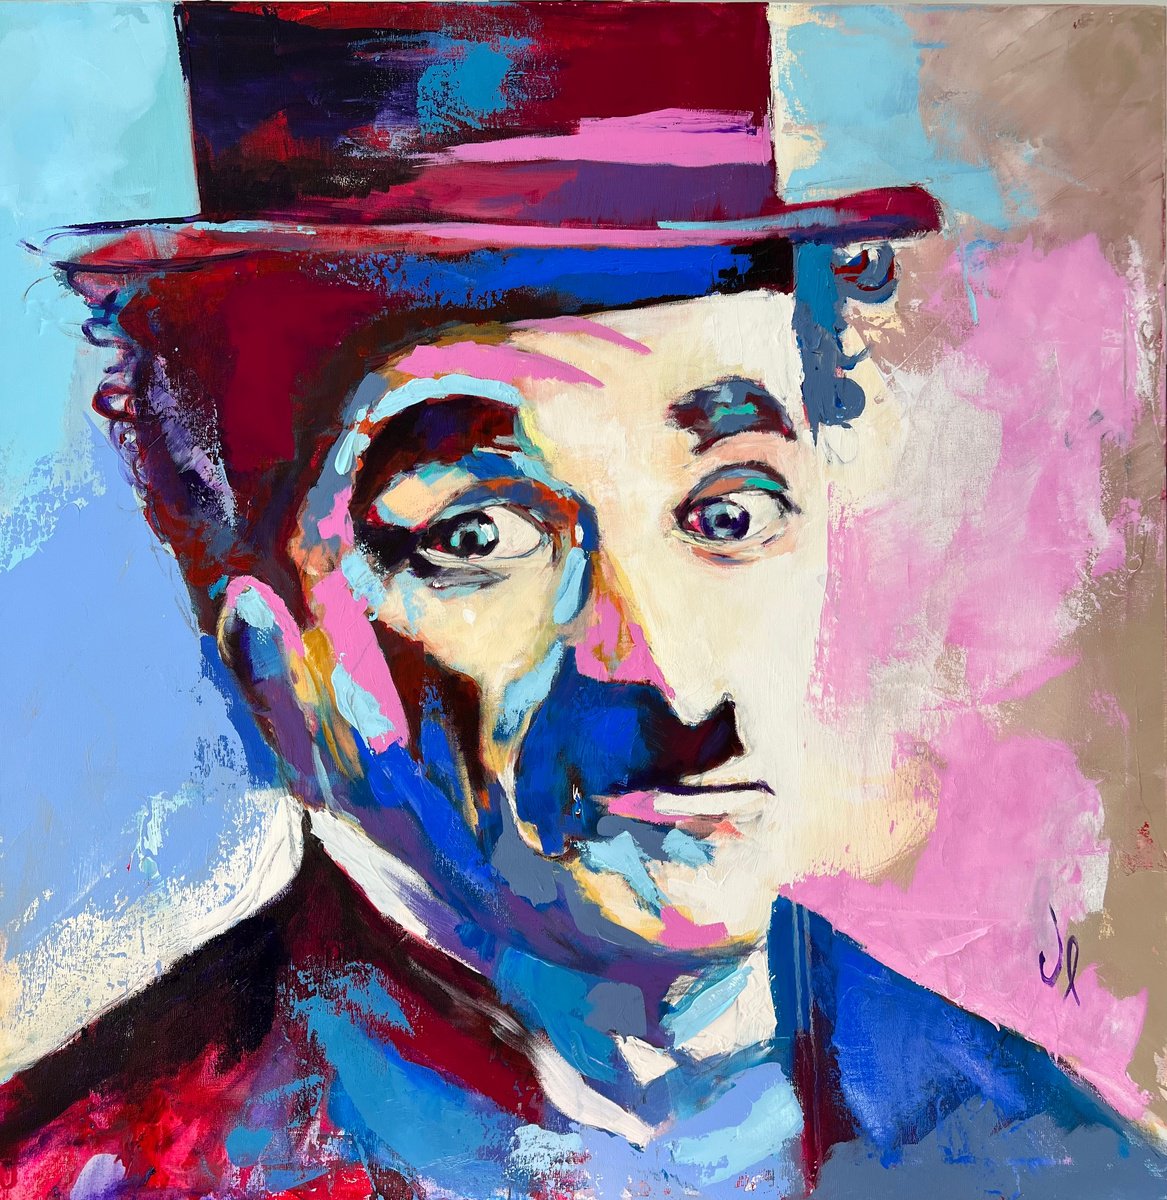 Charlie Chaplin Portrait 100x100cm acrylic on canvas by Javier Pea